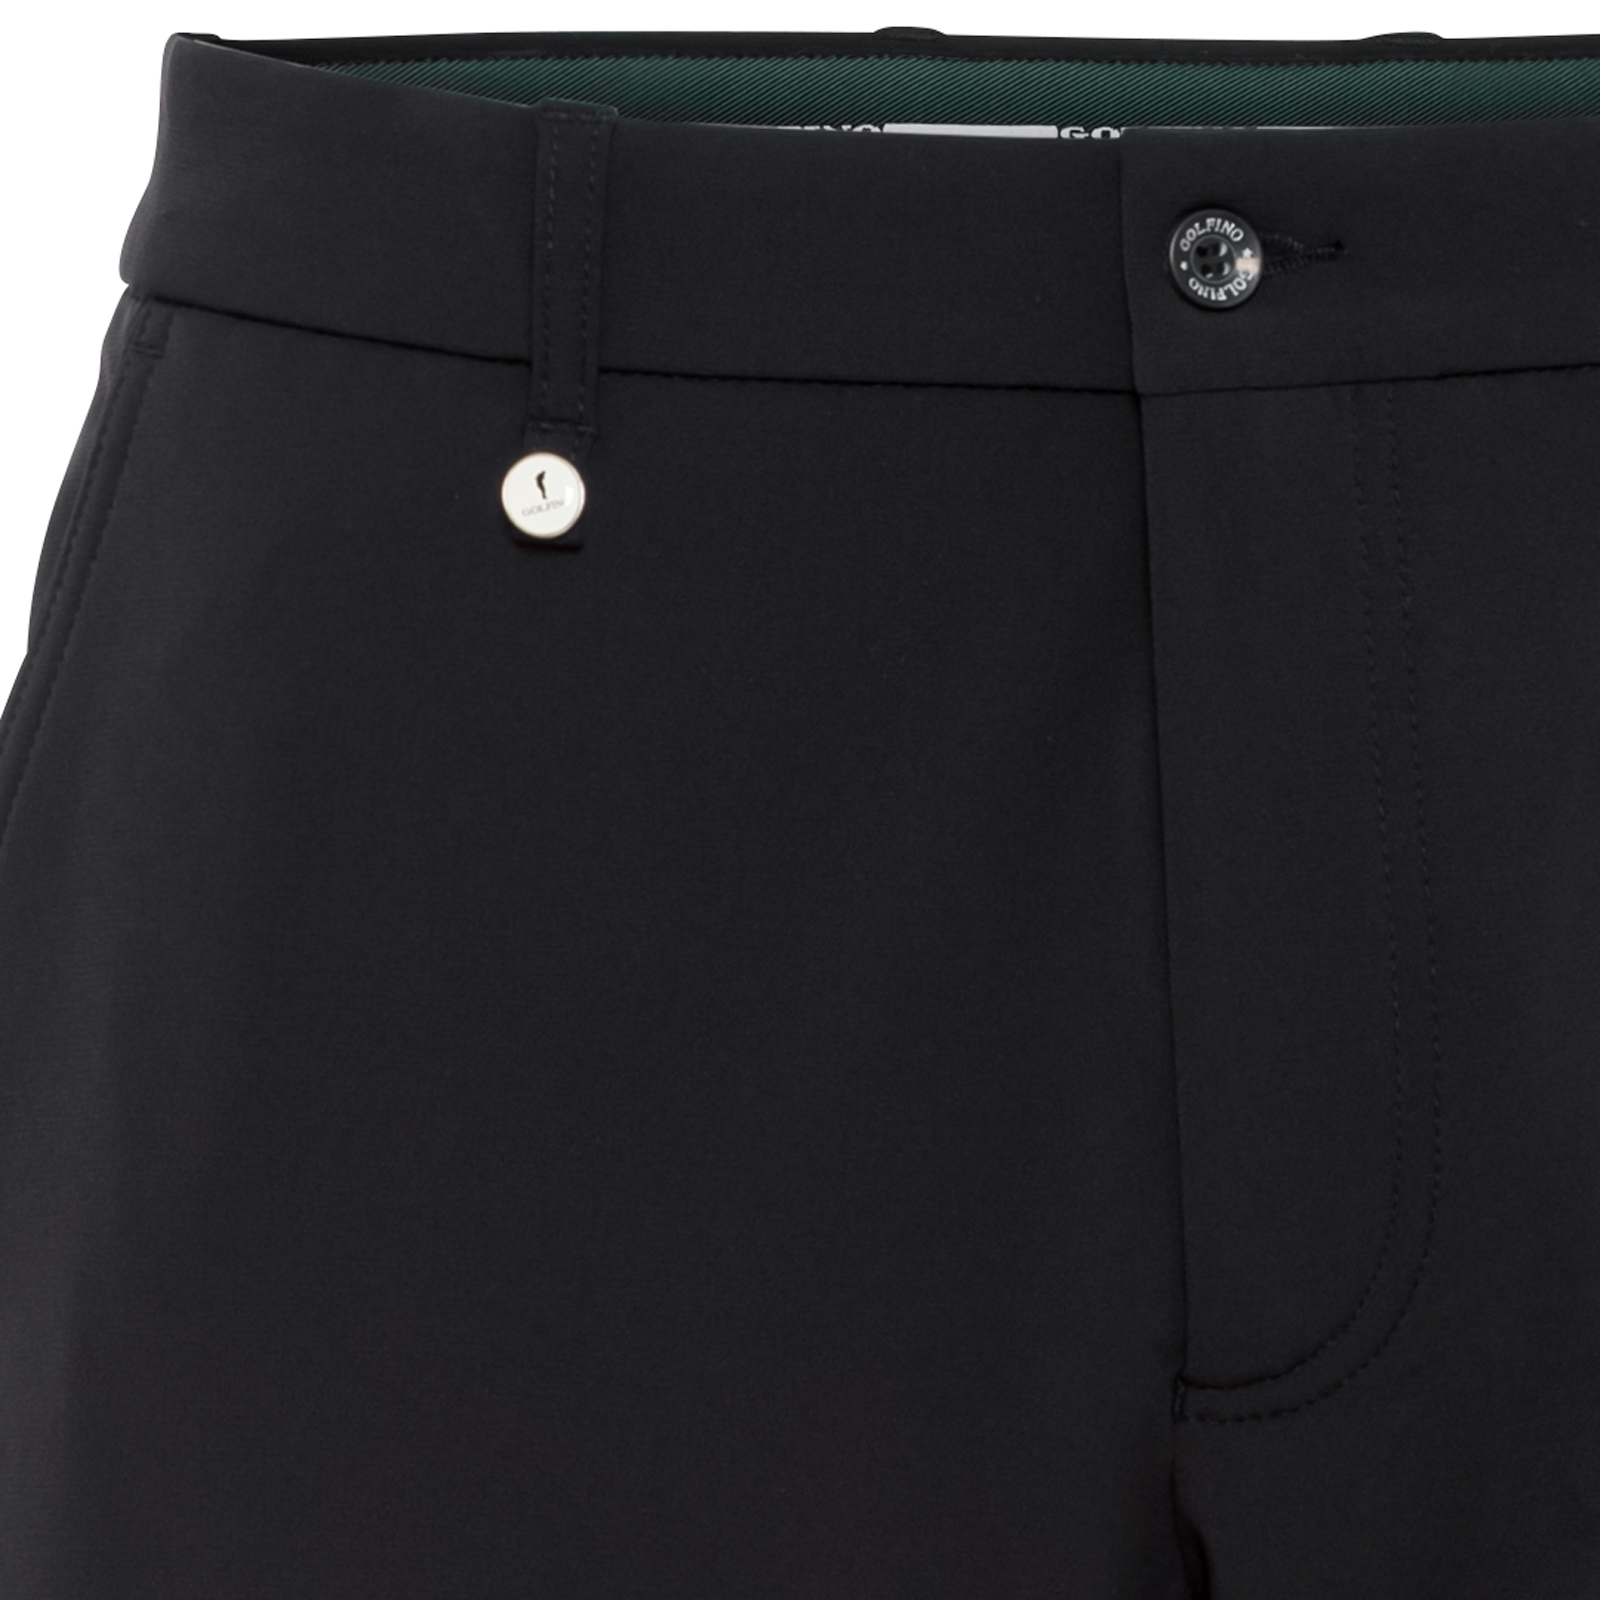 Pantalon de golf sportif Thermo pour homme avec fonction stretch 4 Way extensible